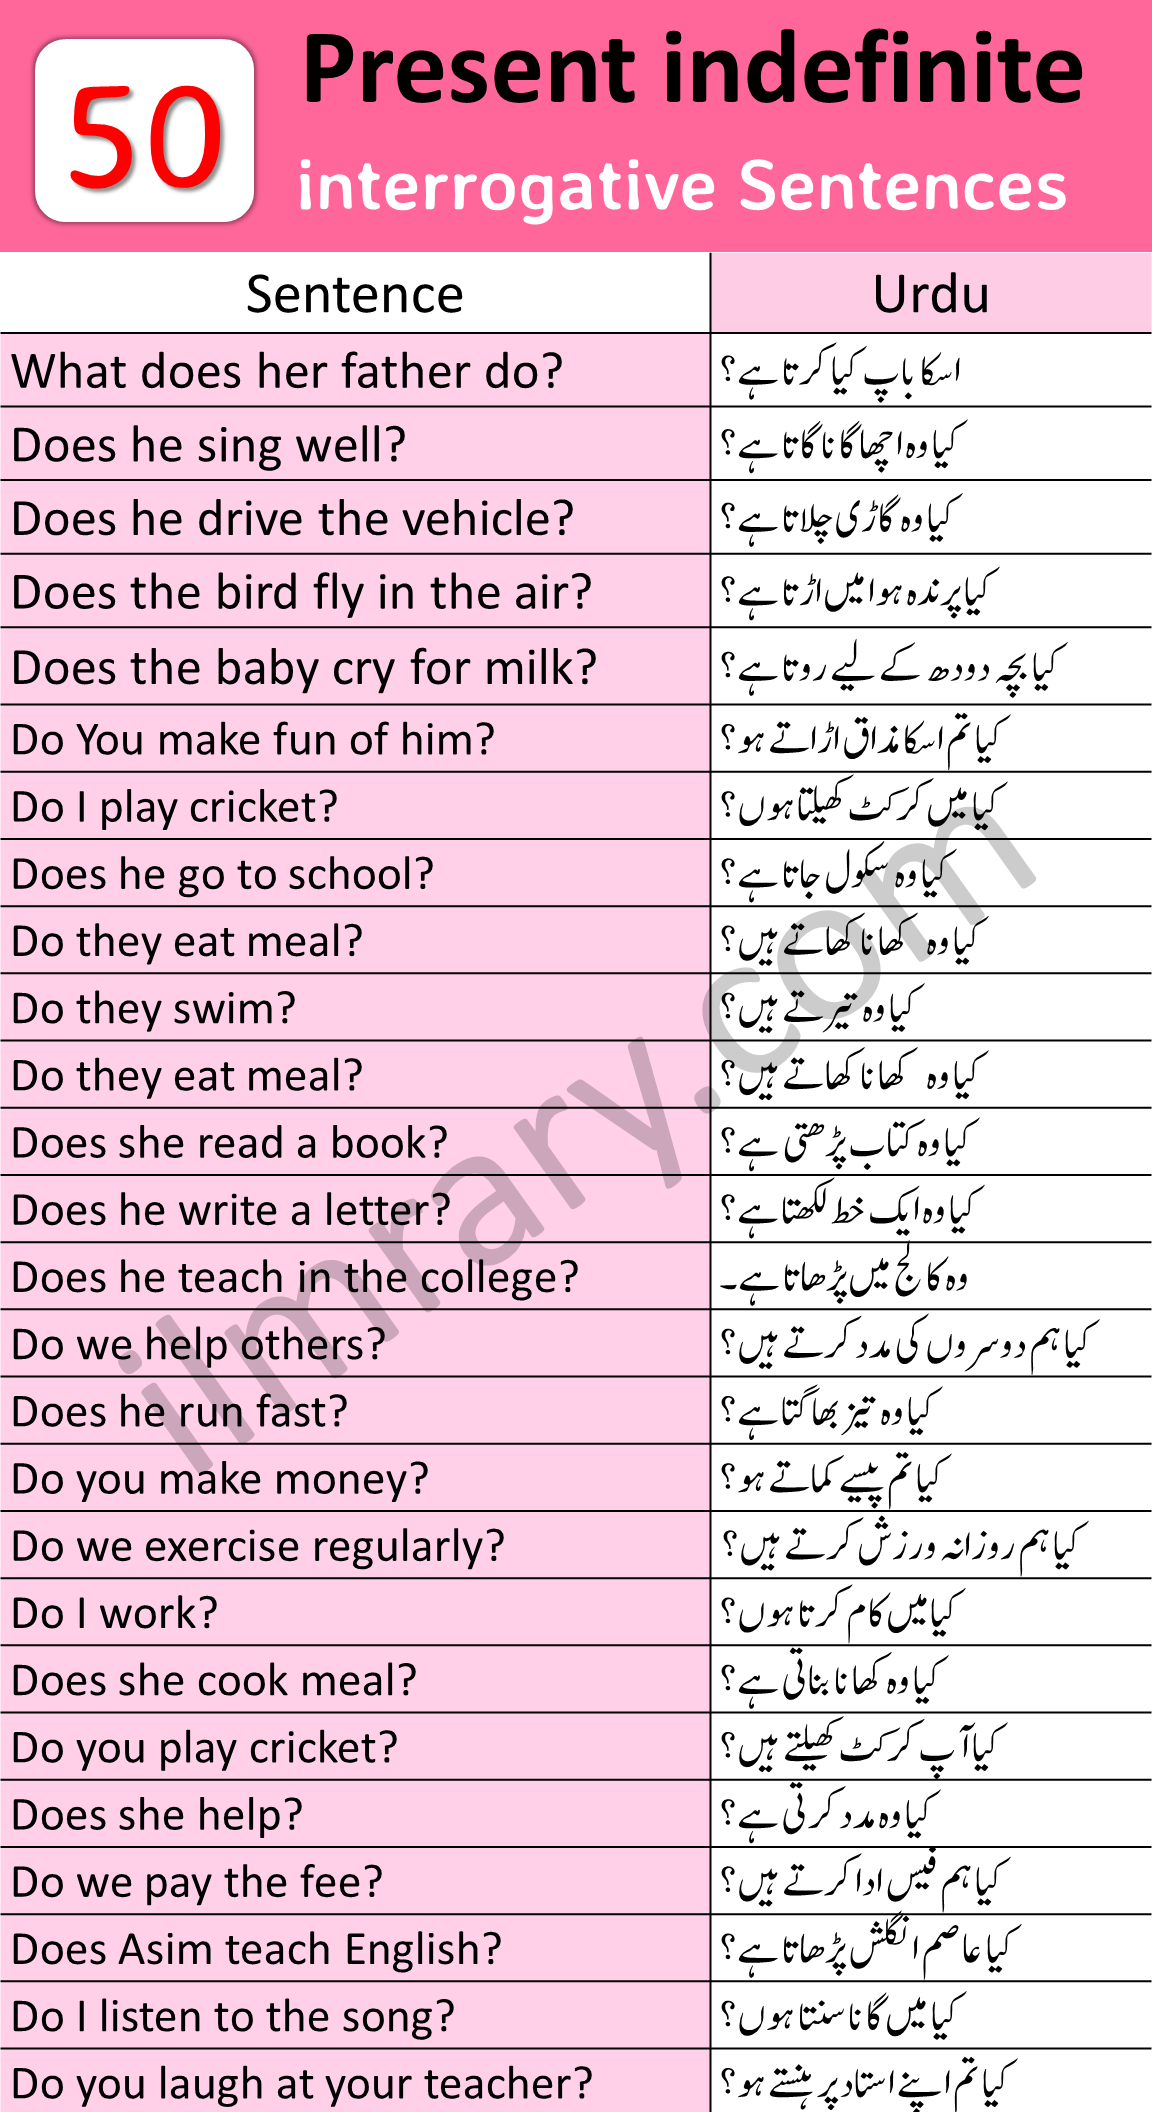 150 Interrogative Sentences for Present Indefinite Tense With Urdu and Hindi Translation